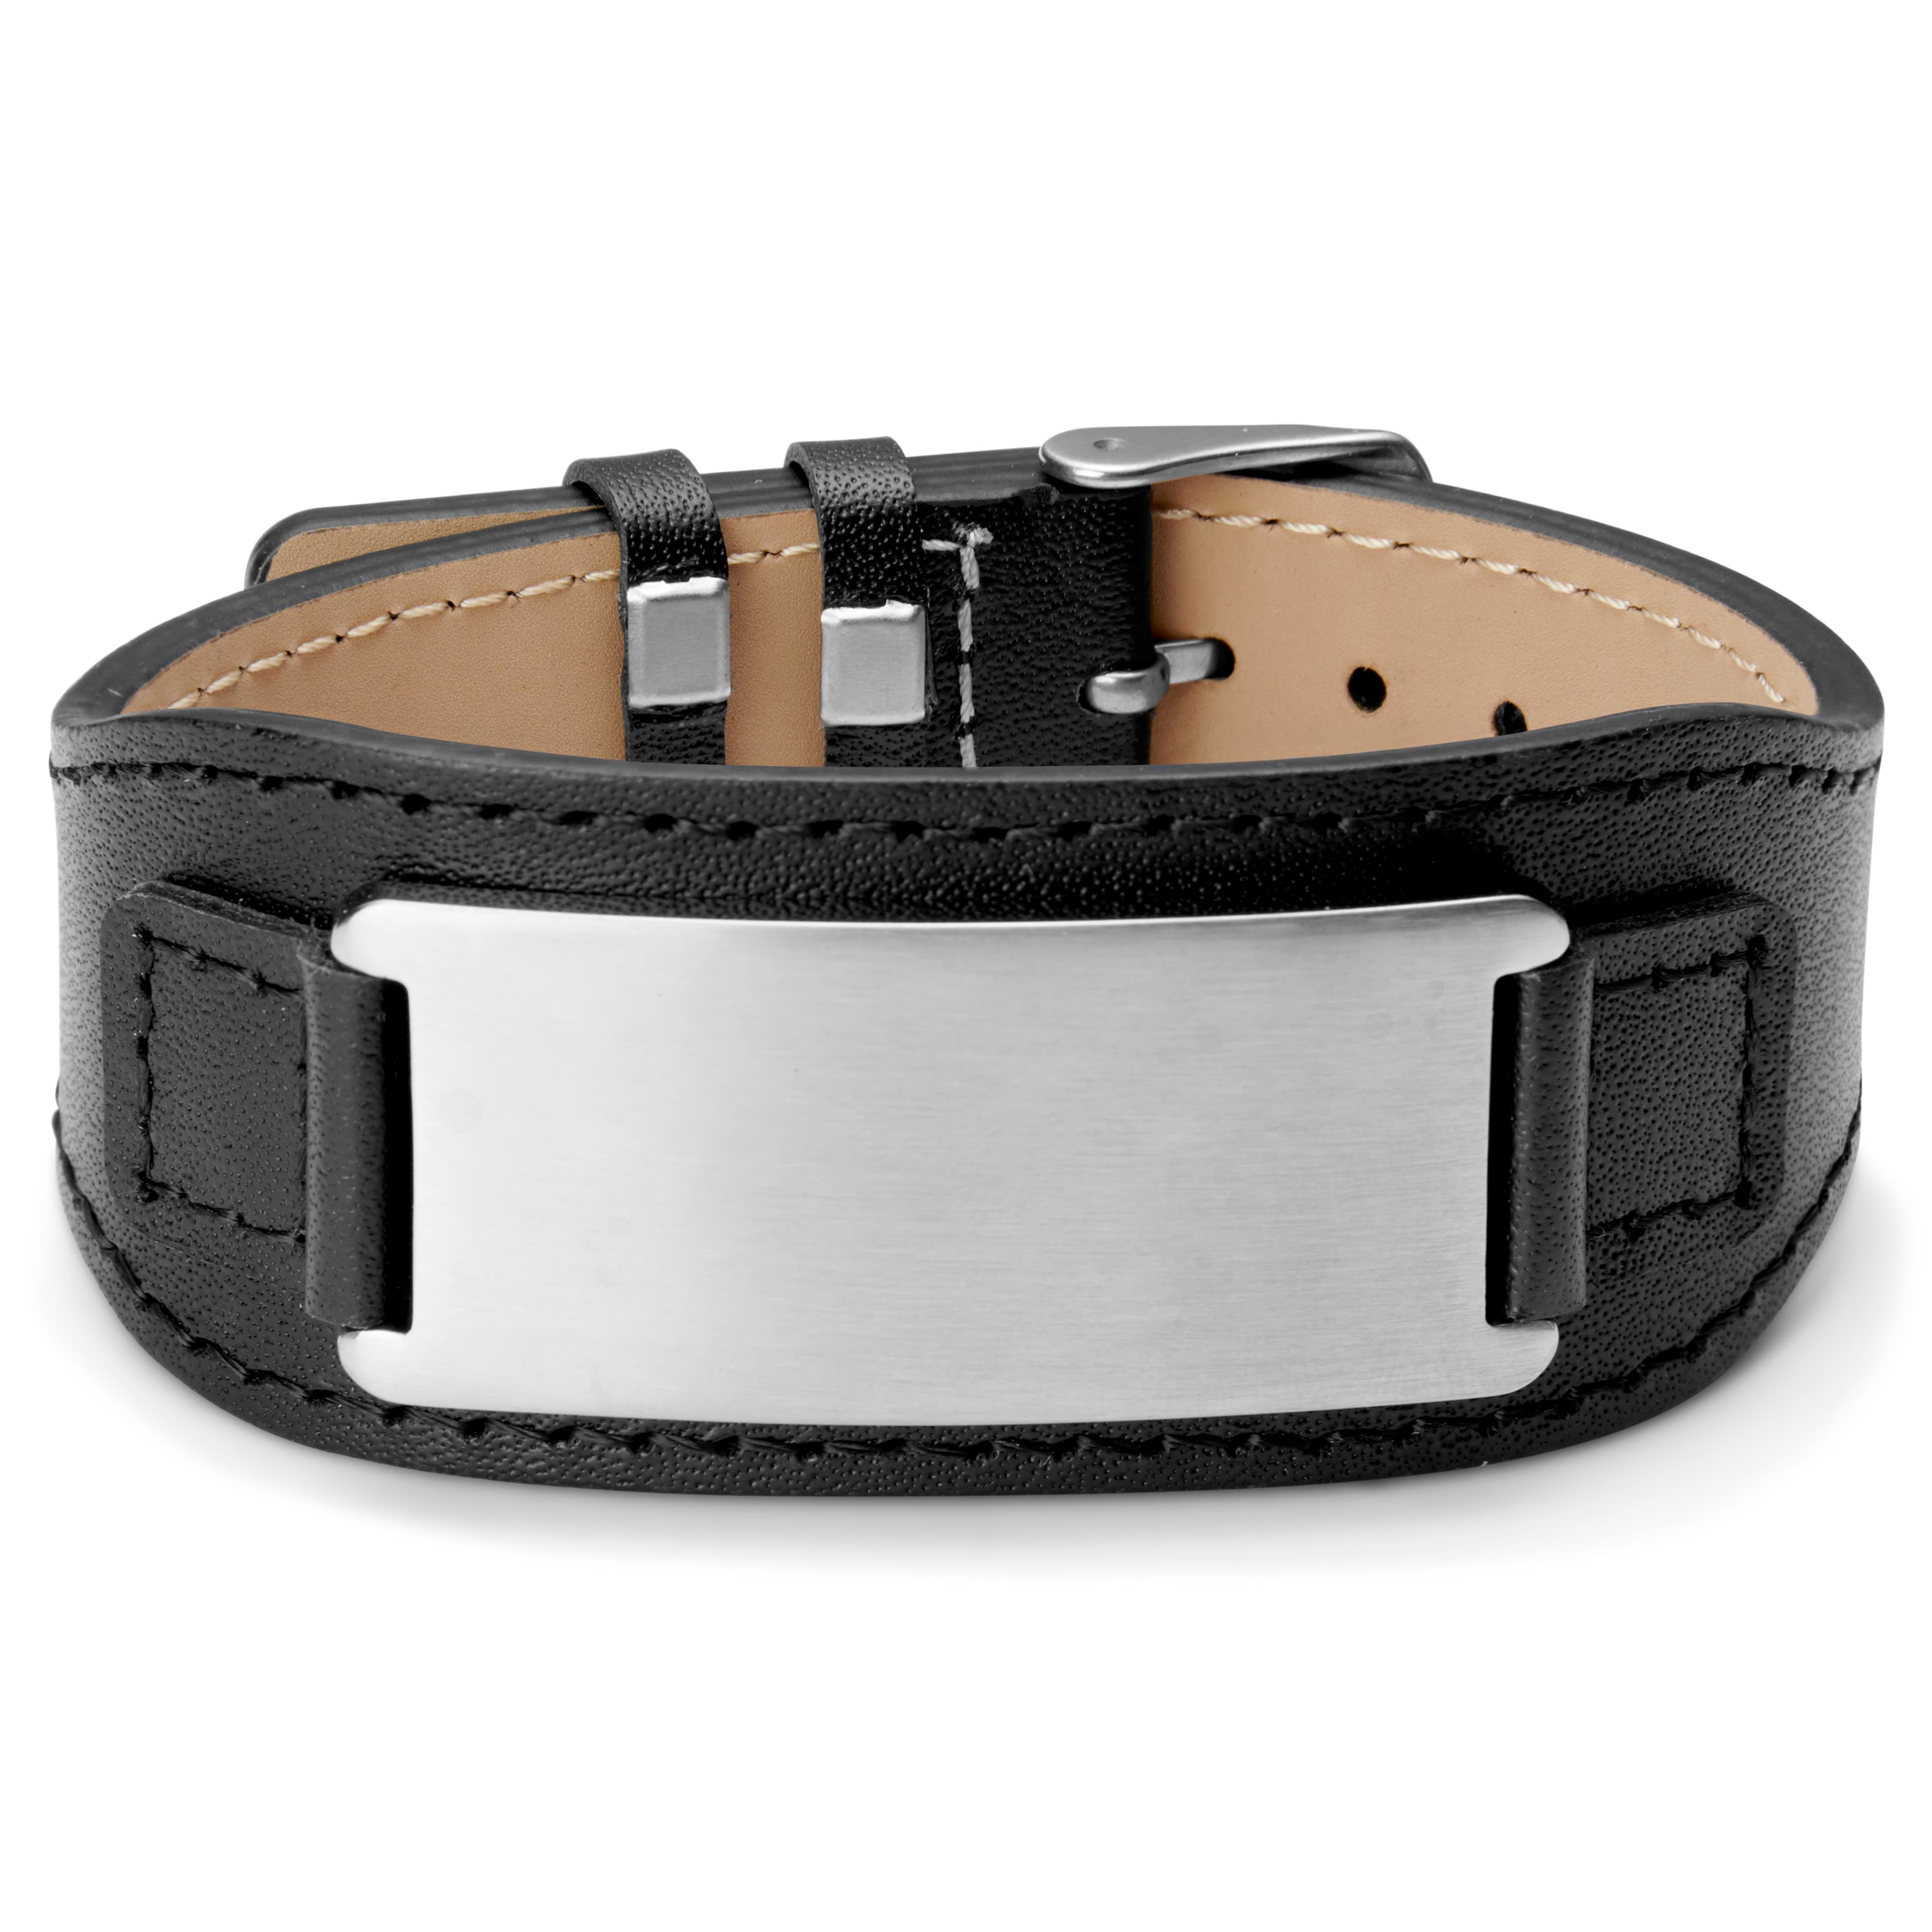 Bracelet en cuir noir avec plaque d'identification en acier inoxydable